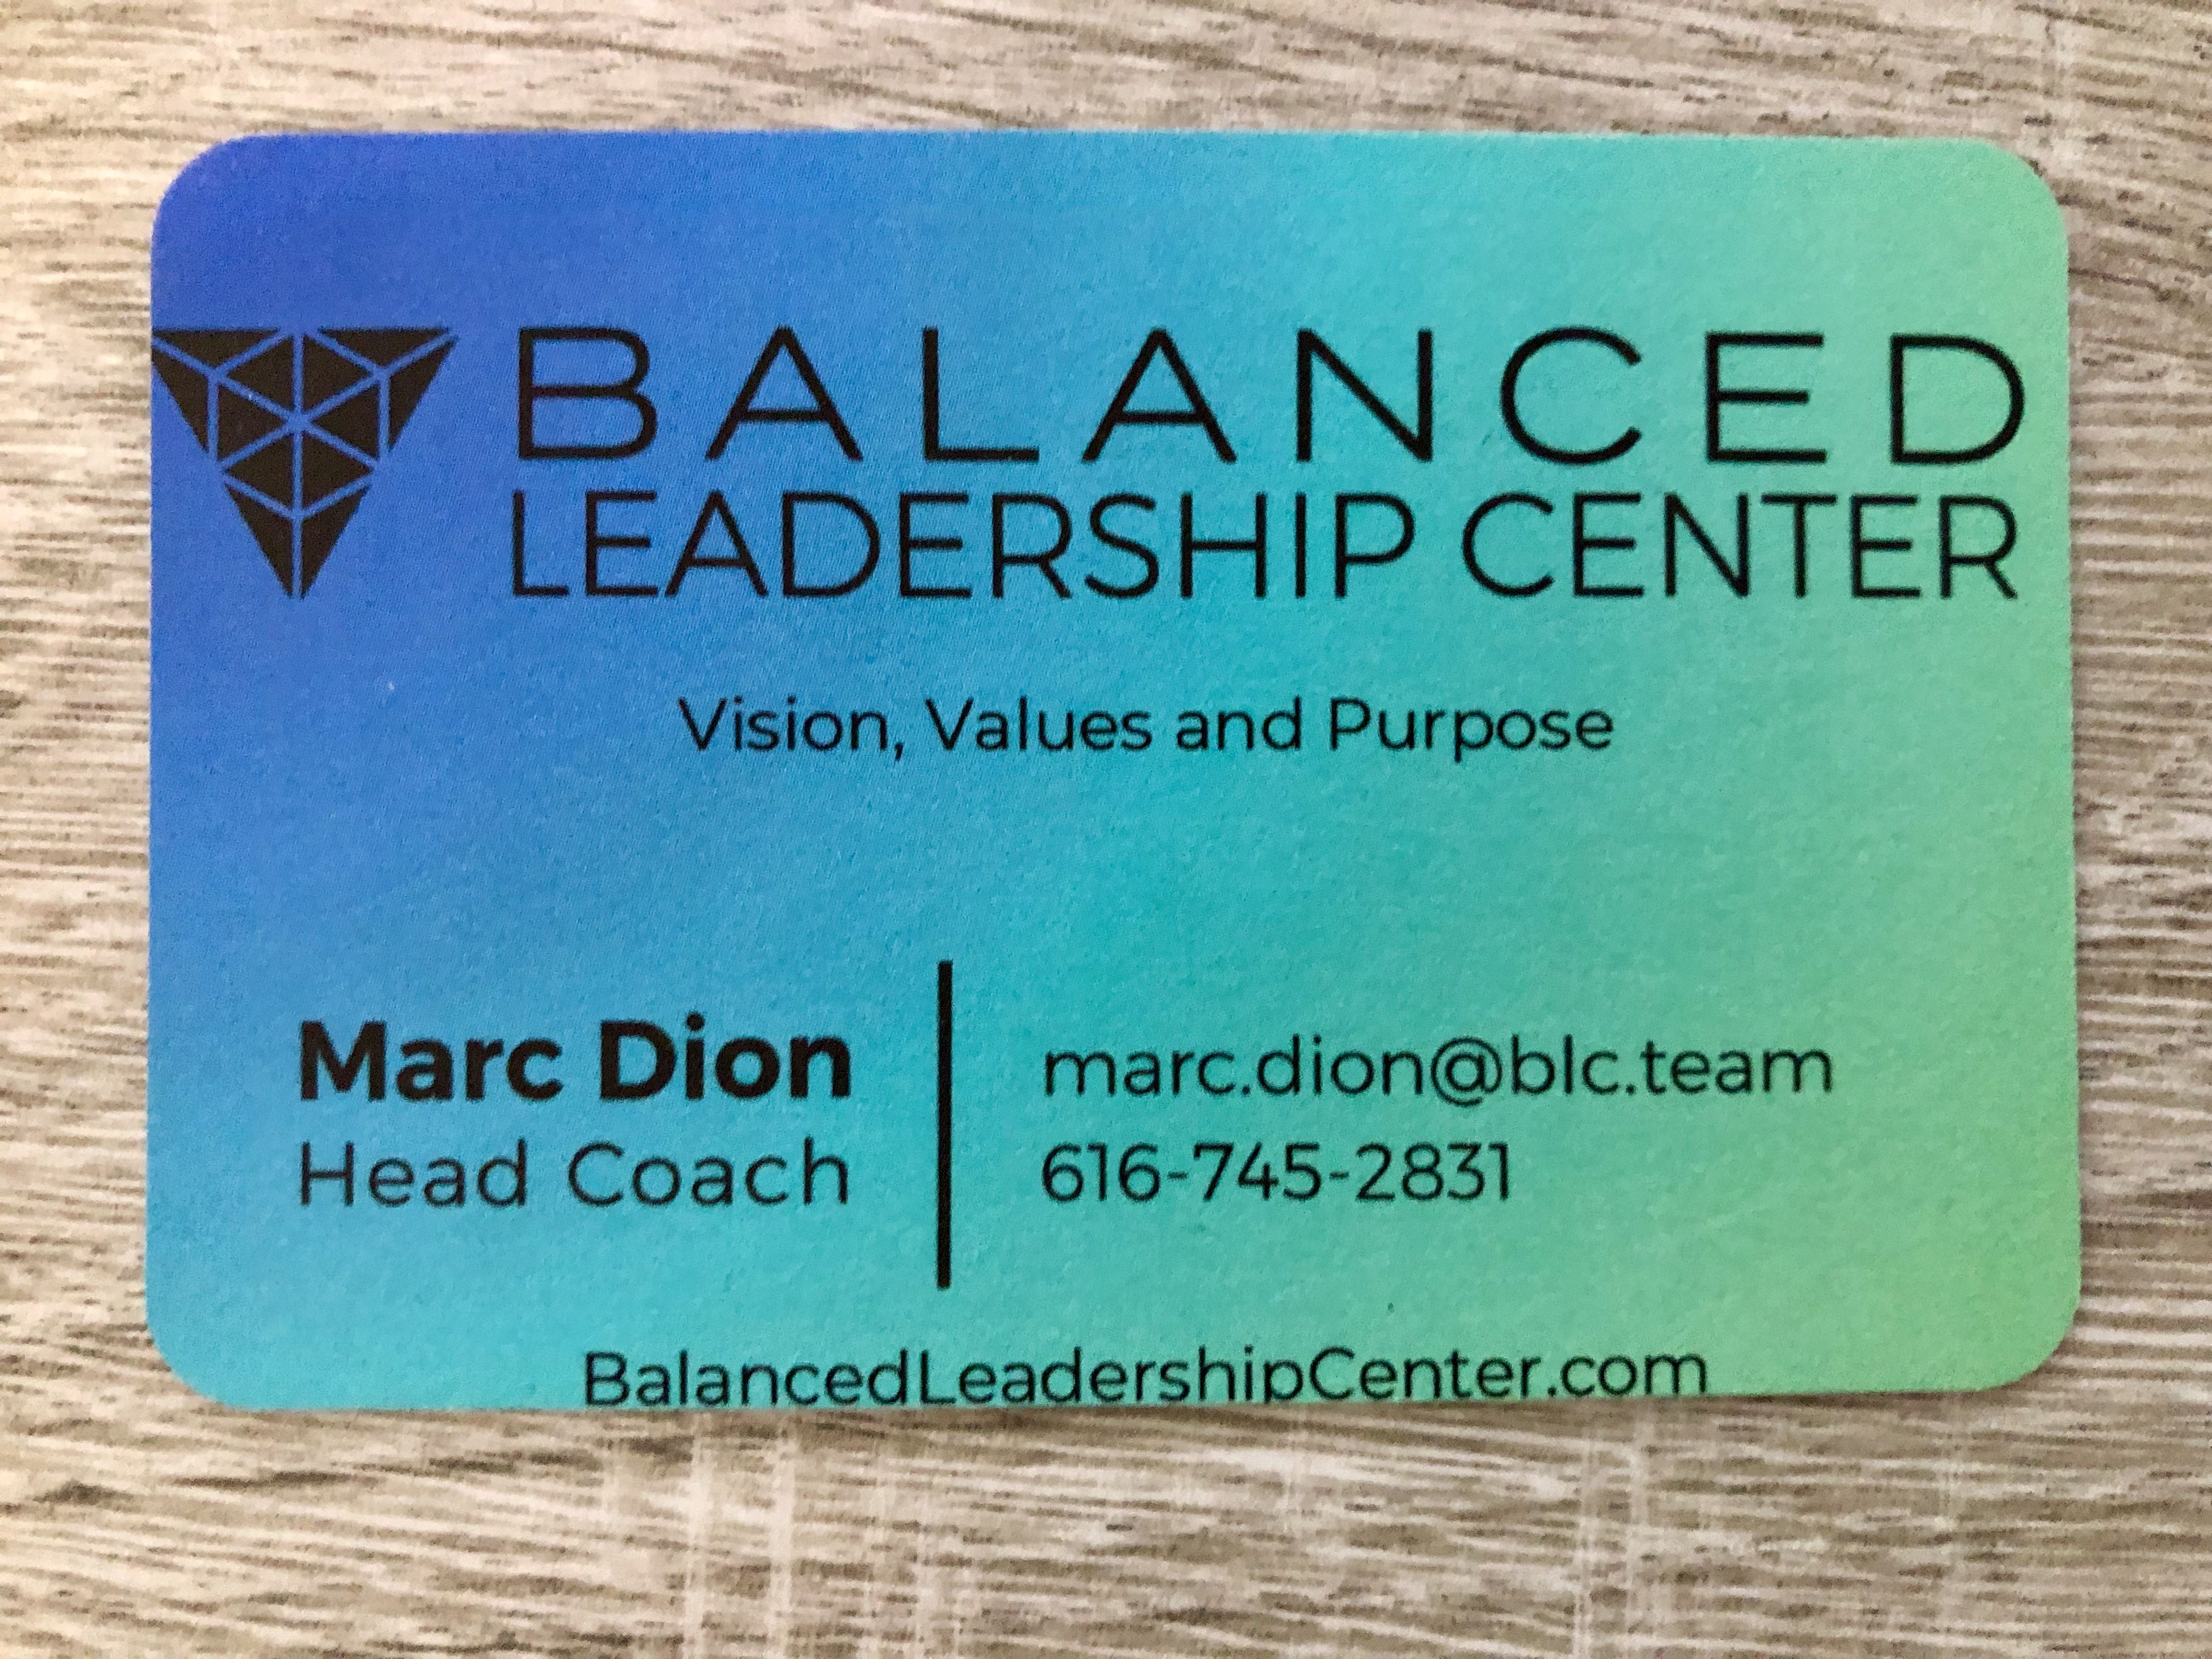 Balanced Leadership Center - Marc Dion, Head Coach